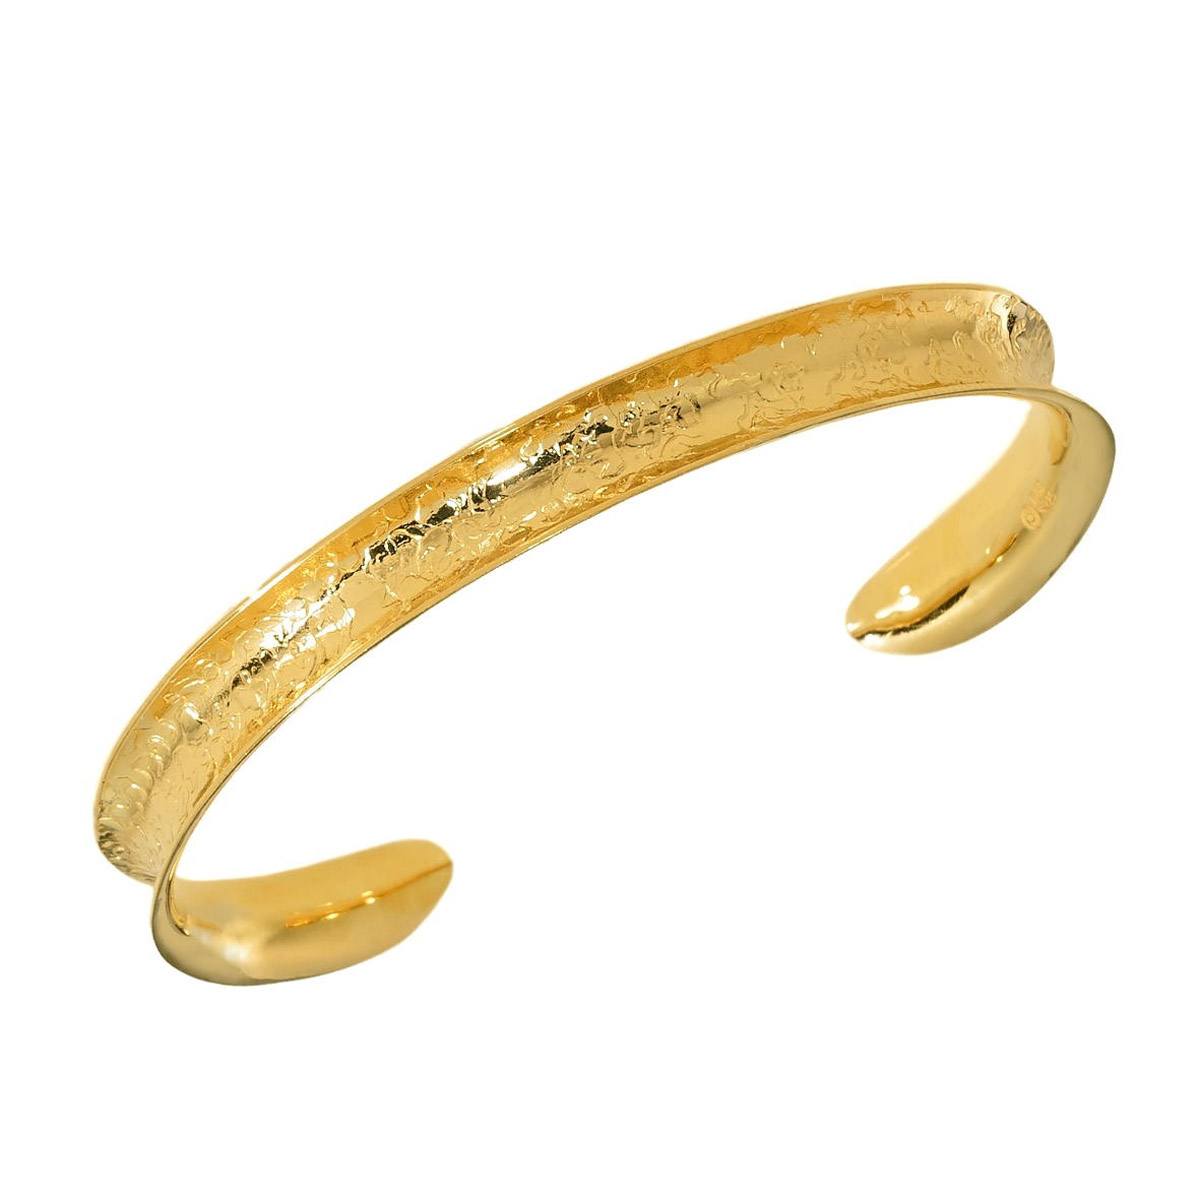 GREGIO Cuff Bracelet - Gold Plated Silver 925